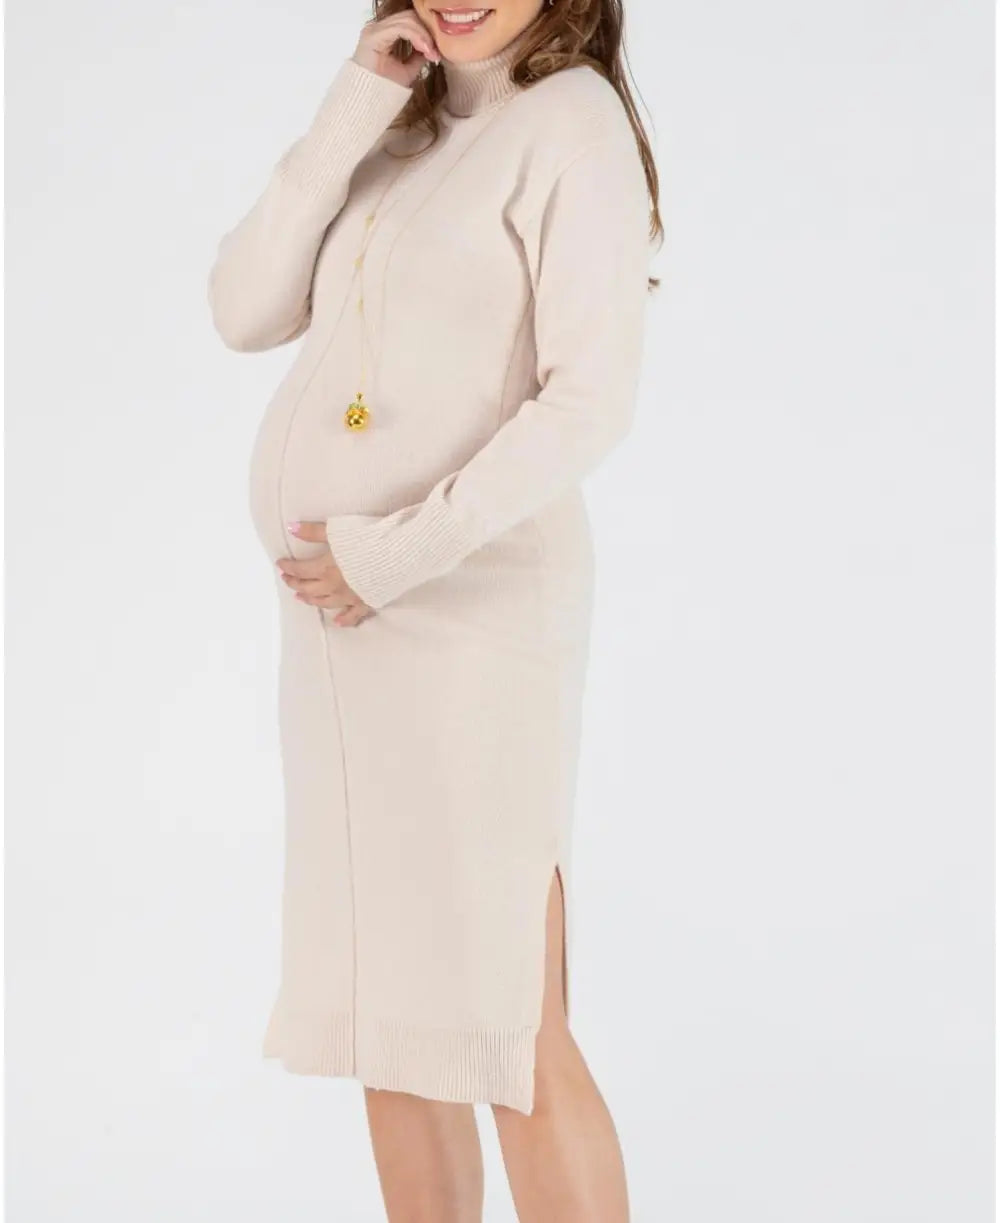 Cashemere pregnancy and nursing dress Adele sand - Robes